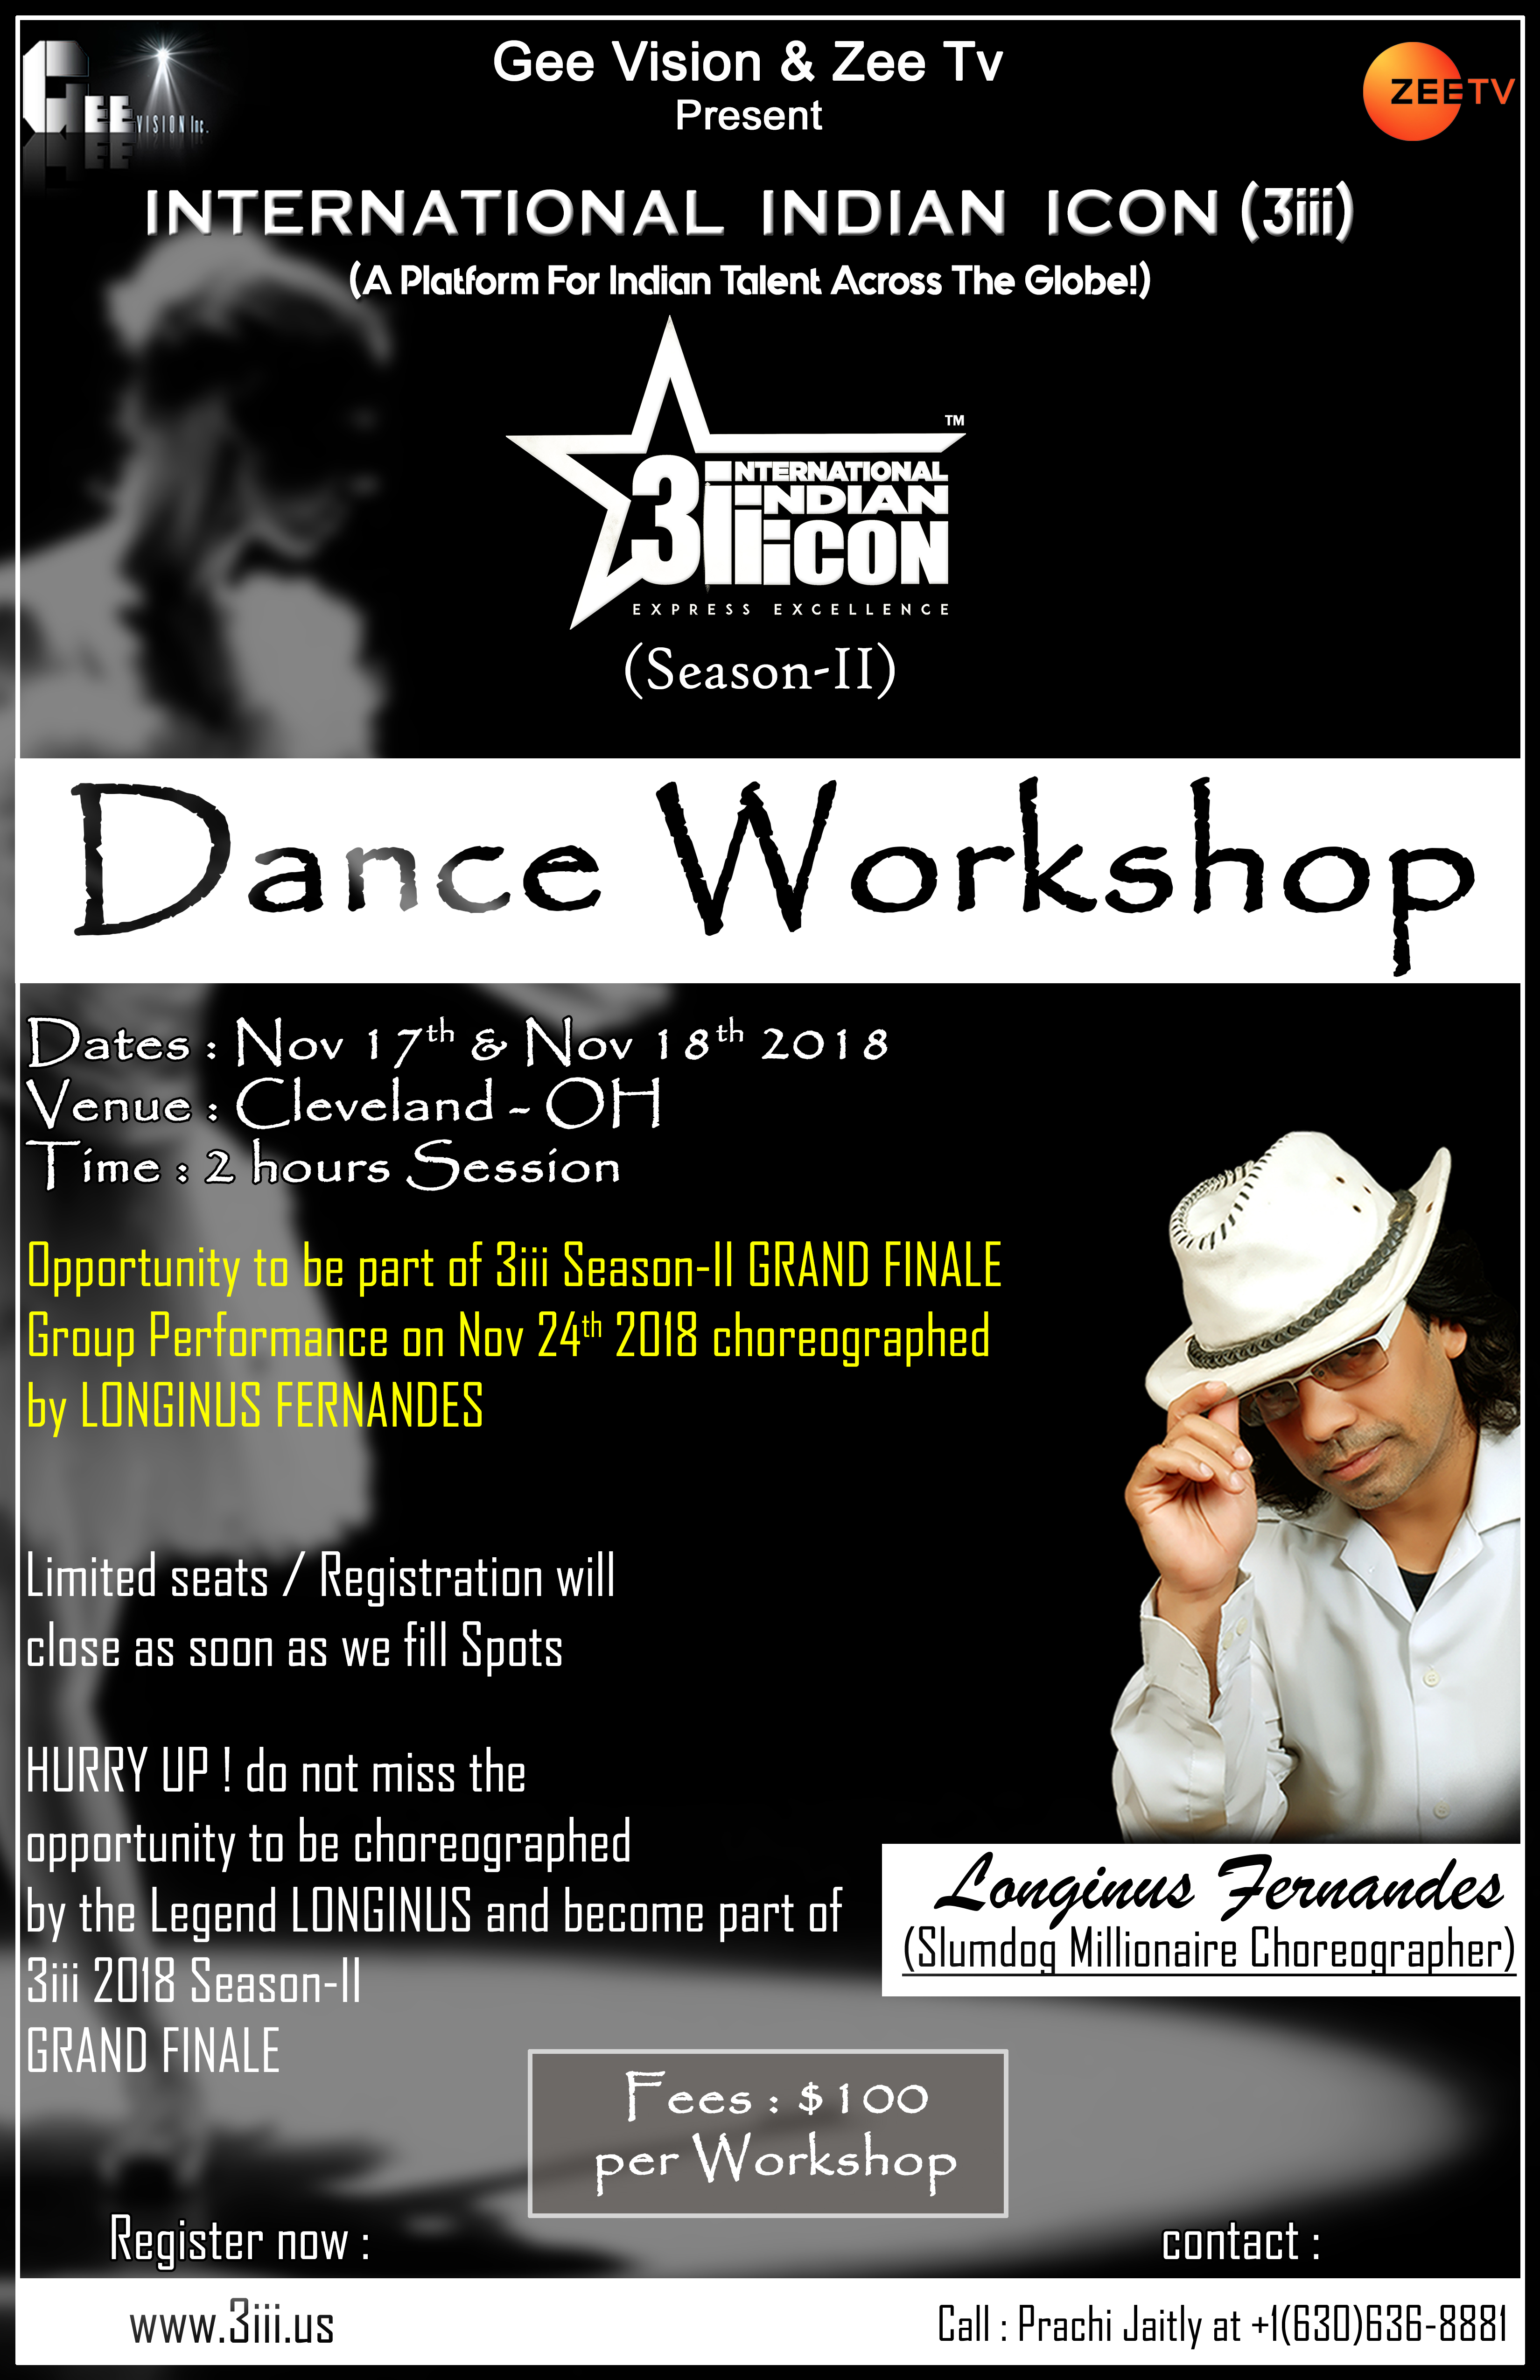 Dance Workshop with Longinus Fernendas